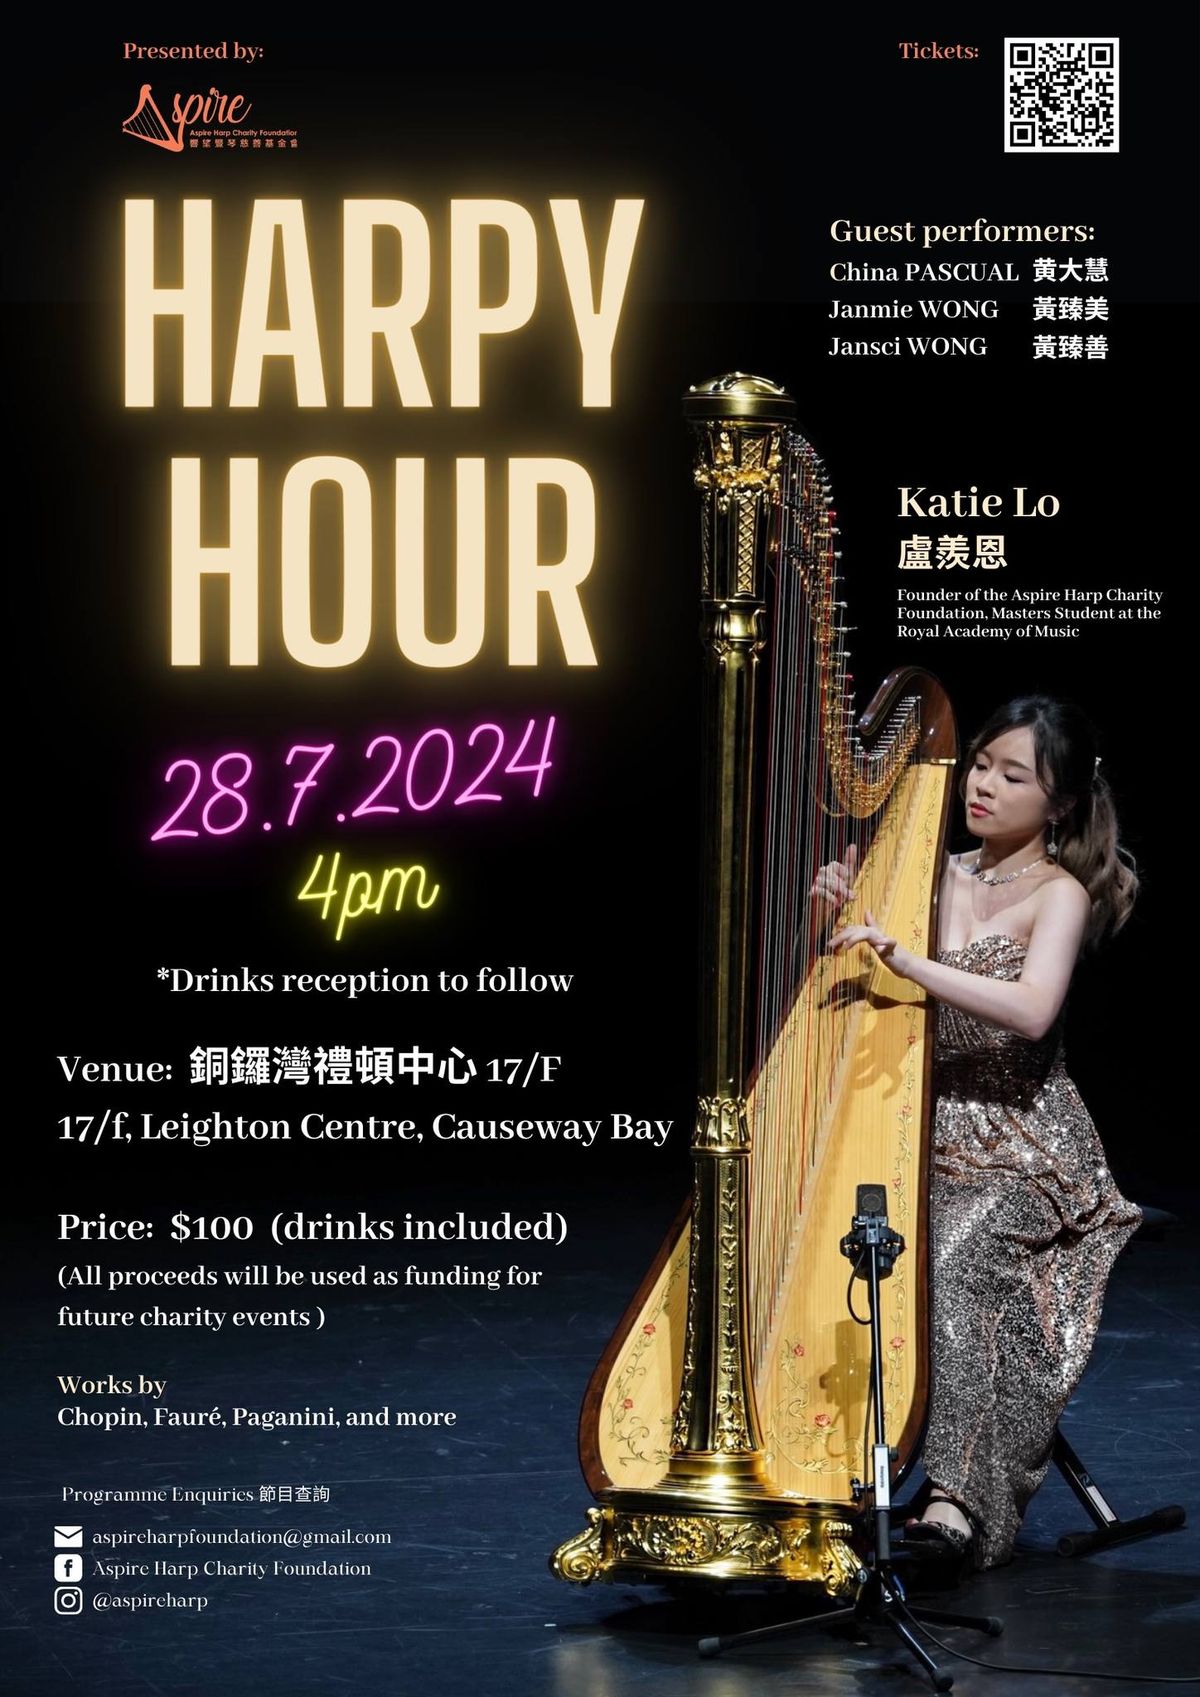 "Harpy Hour" - Happy Hour Harp Recital\ud83e\udd42